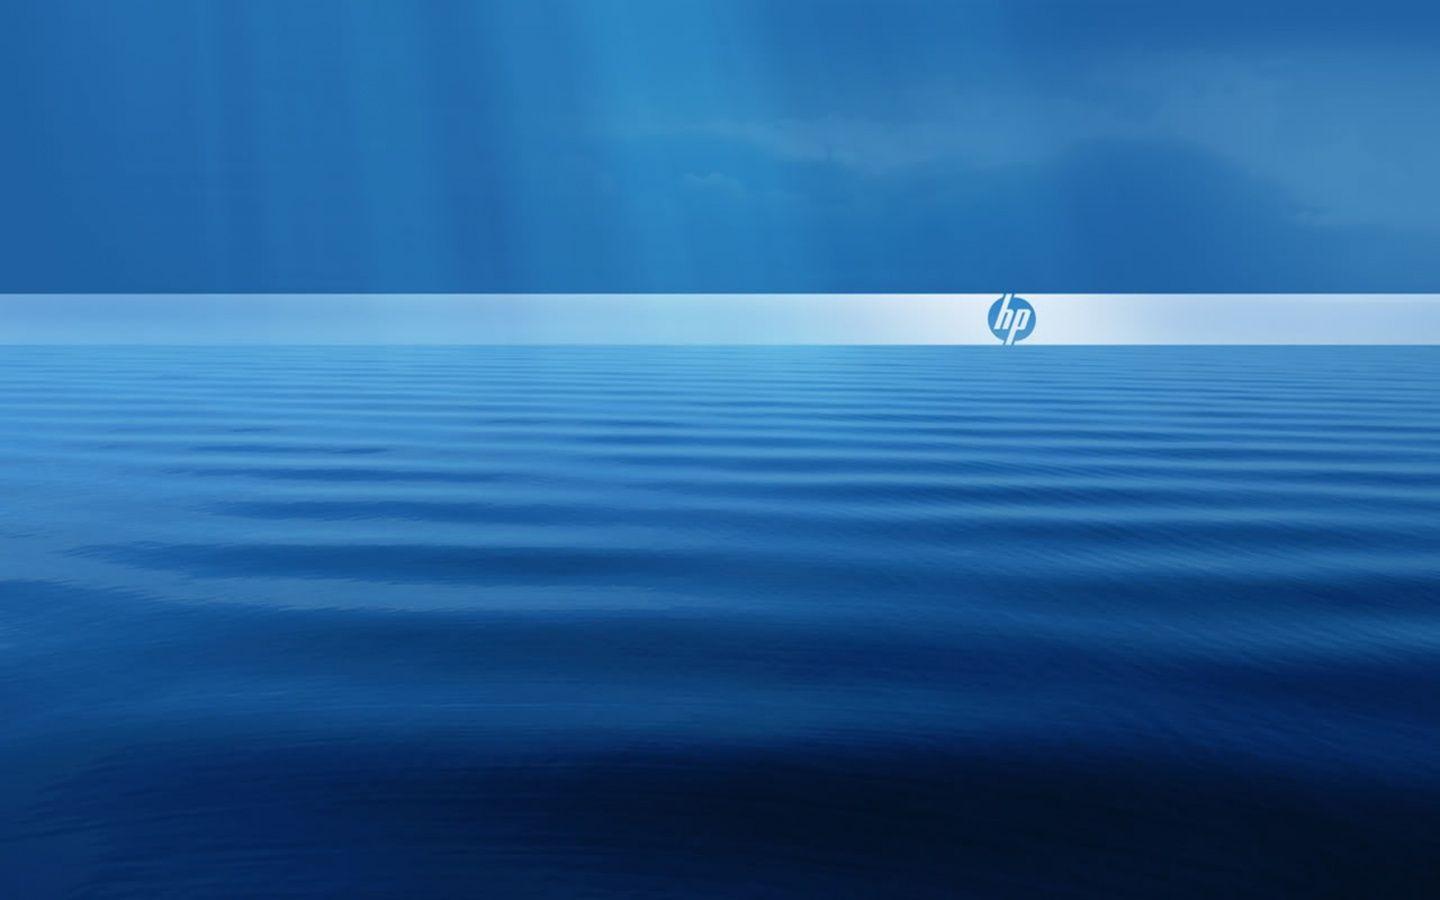 Hewlett Packard Desktop Background